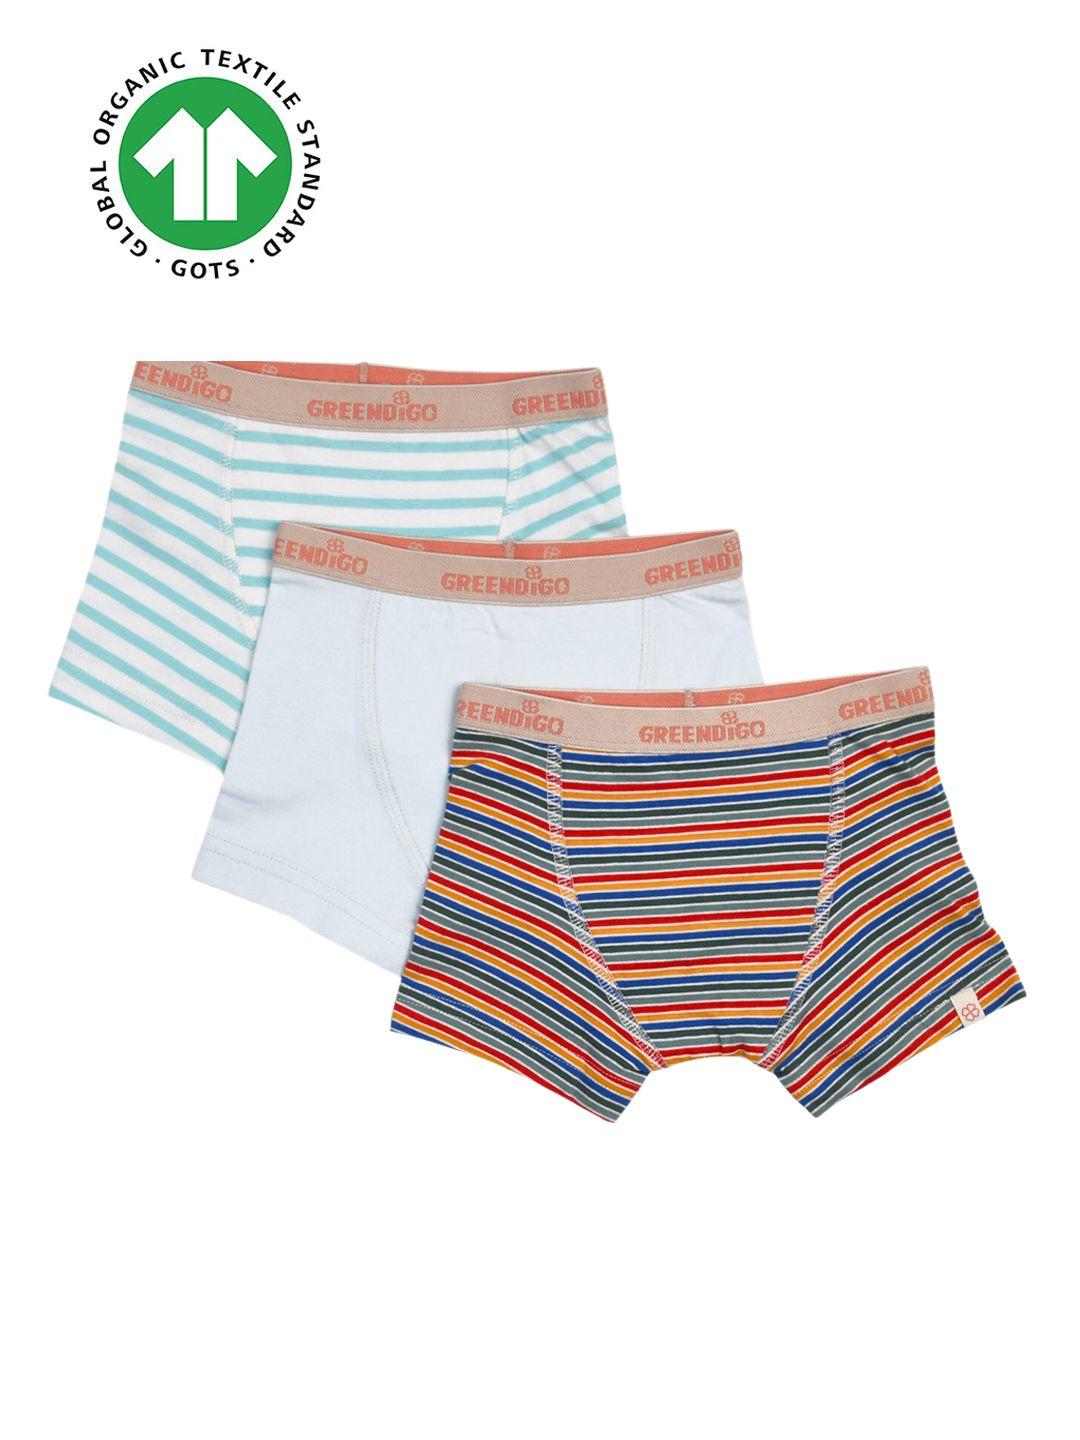 greendigo boys pack of 3 organic cotton boy shorts briefs